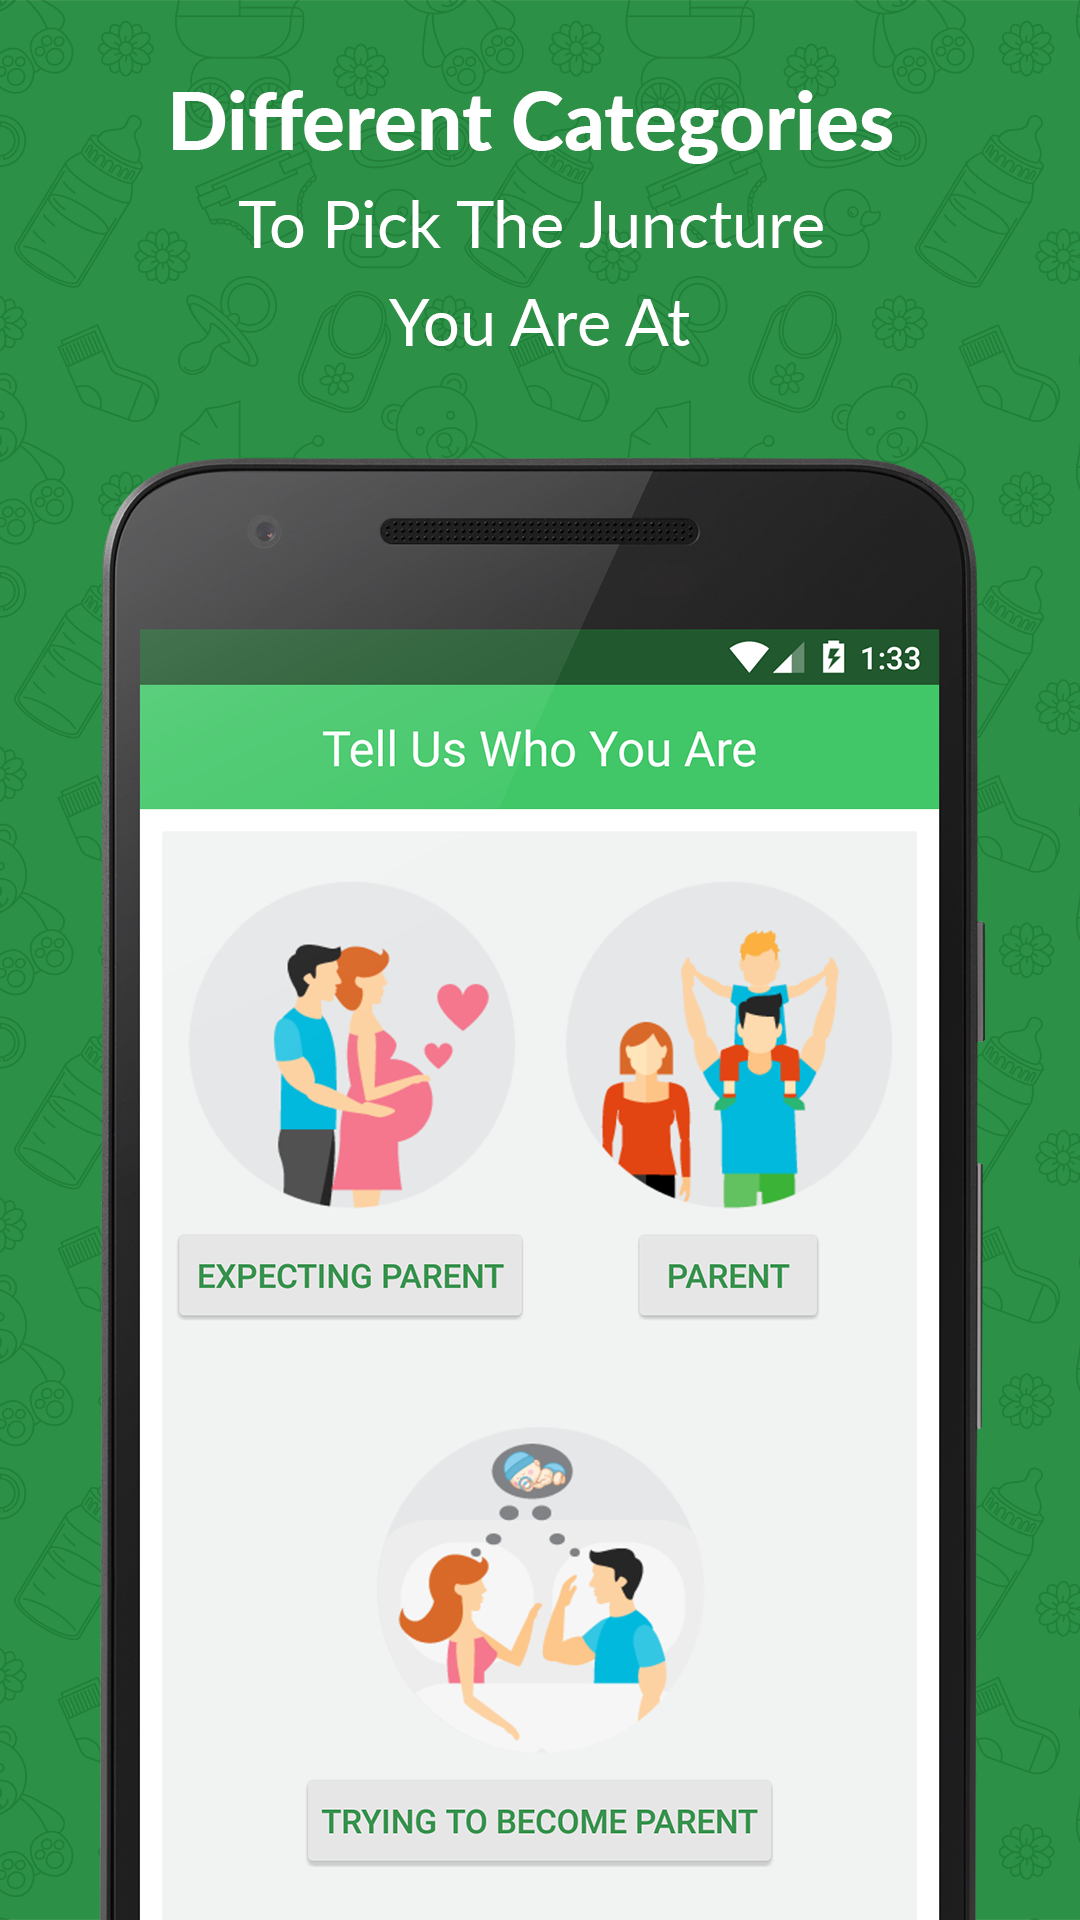 Momjunction App - The Best Pregnancy & Parenting Tips